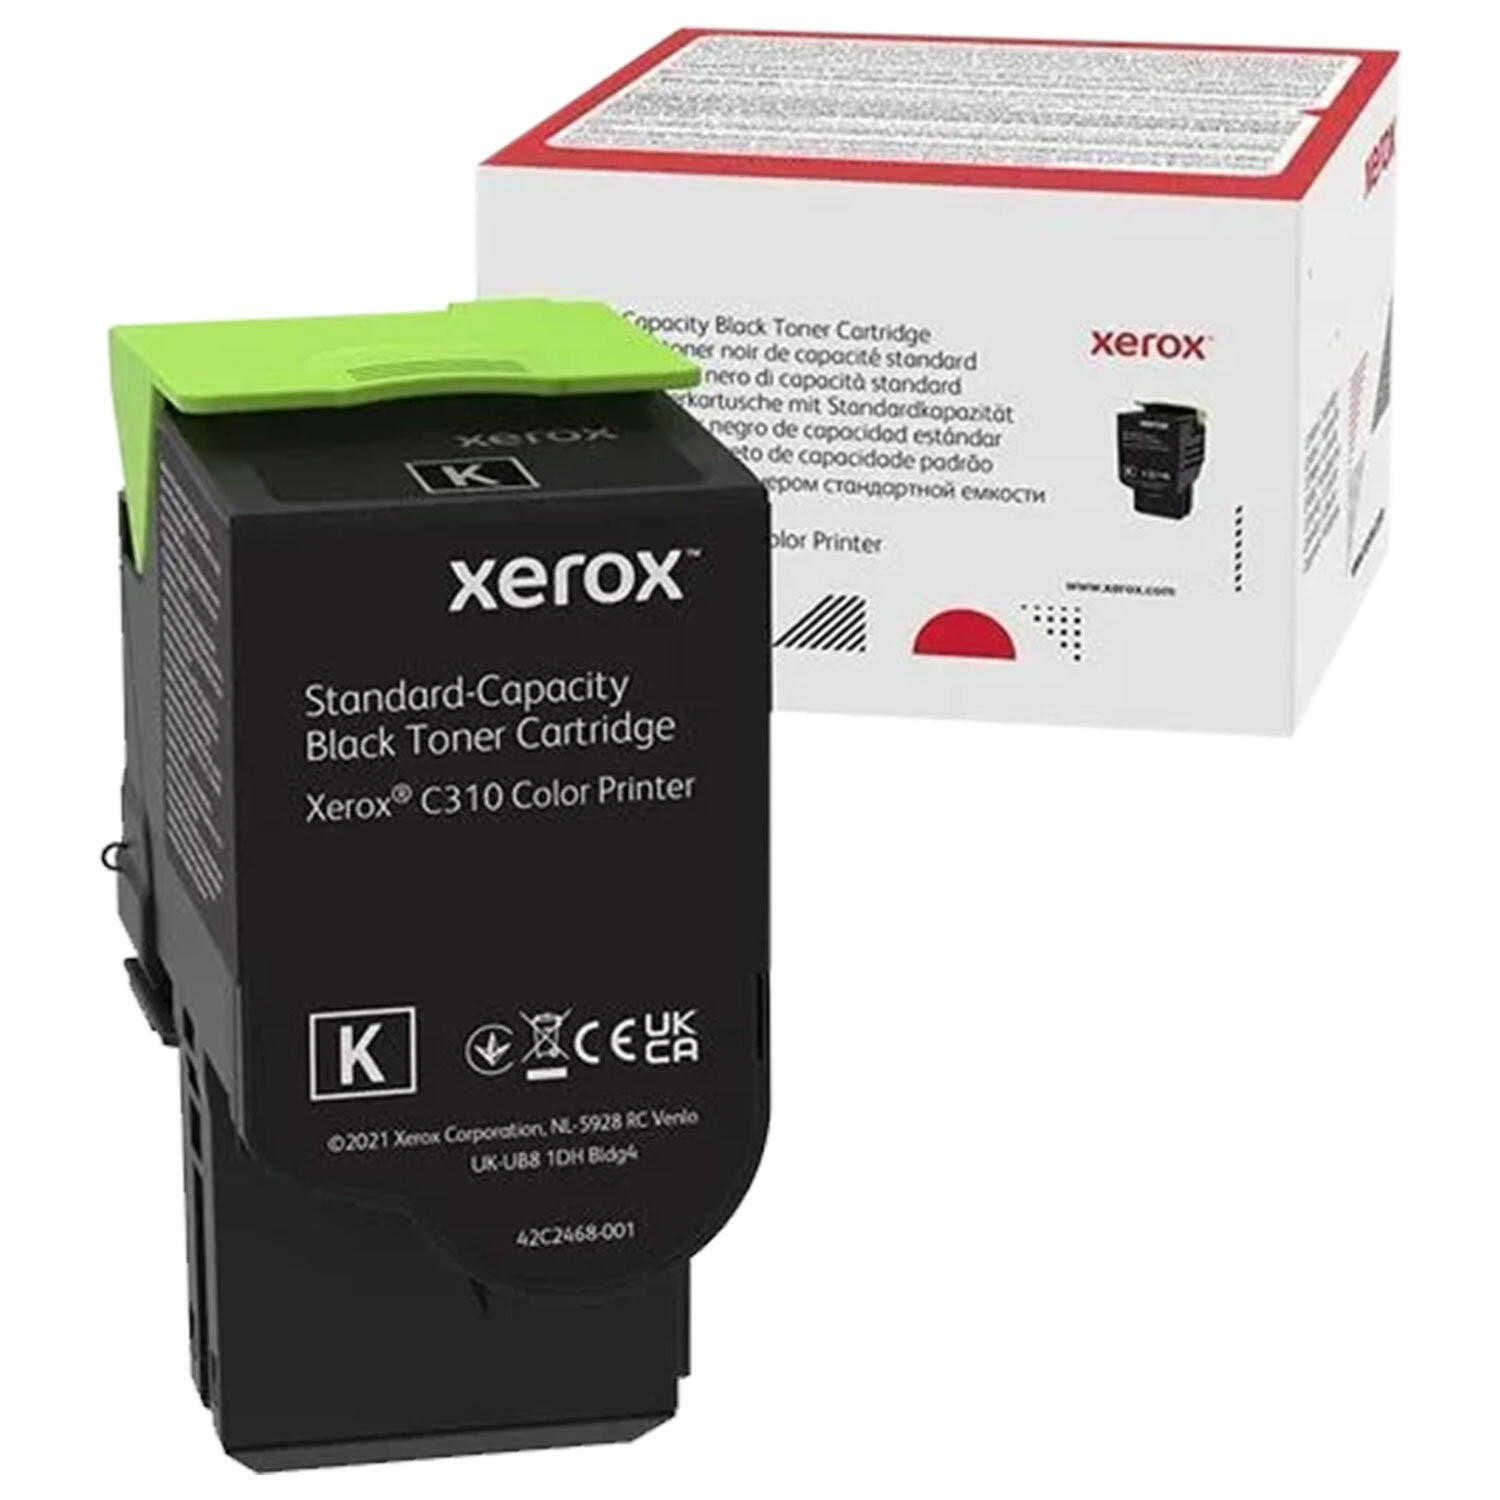  XEROX 364301